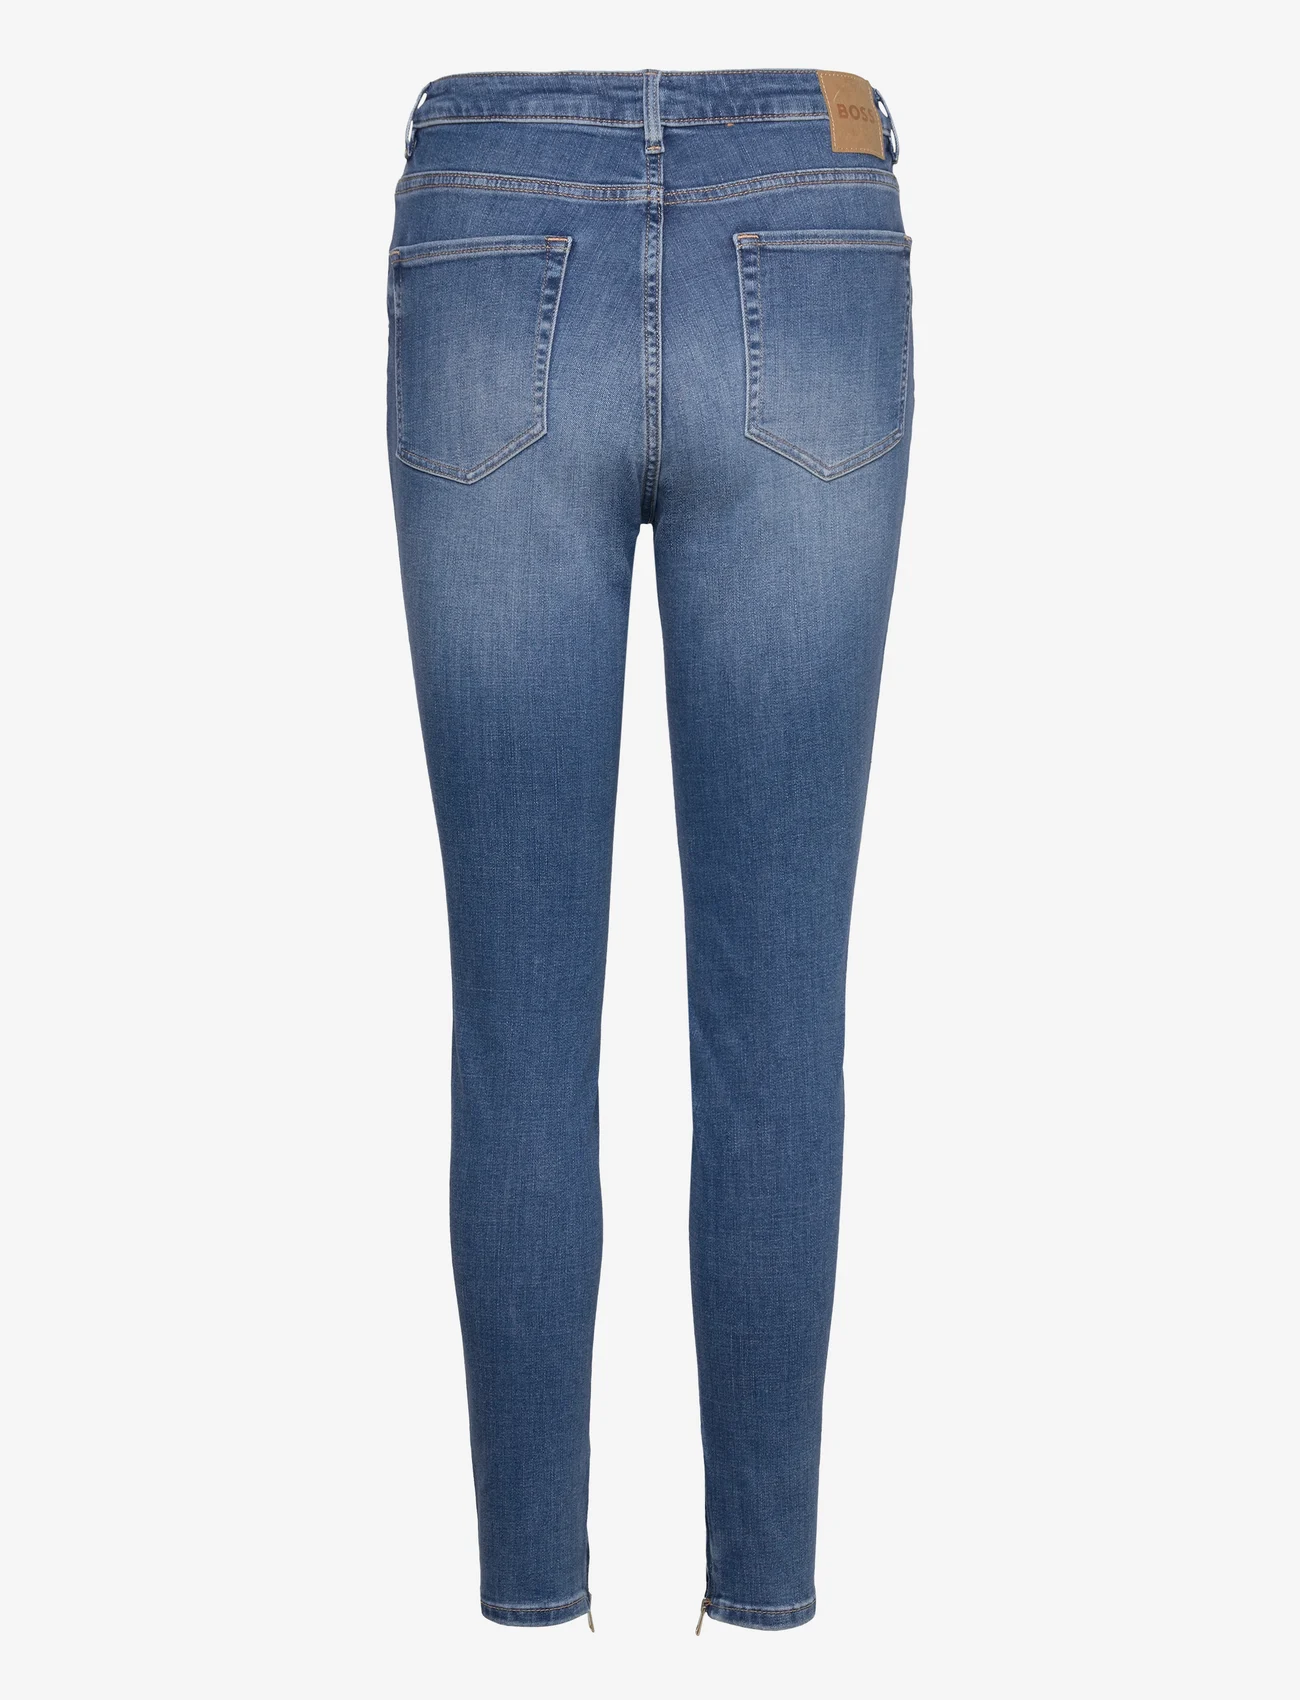 BOSS - MAYE SUP S HR - skinny jeans - medium blue - 1